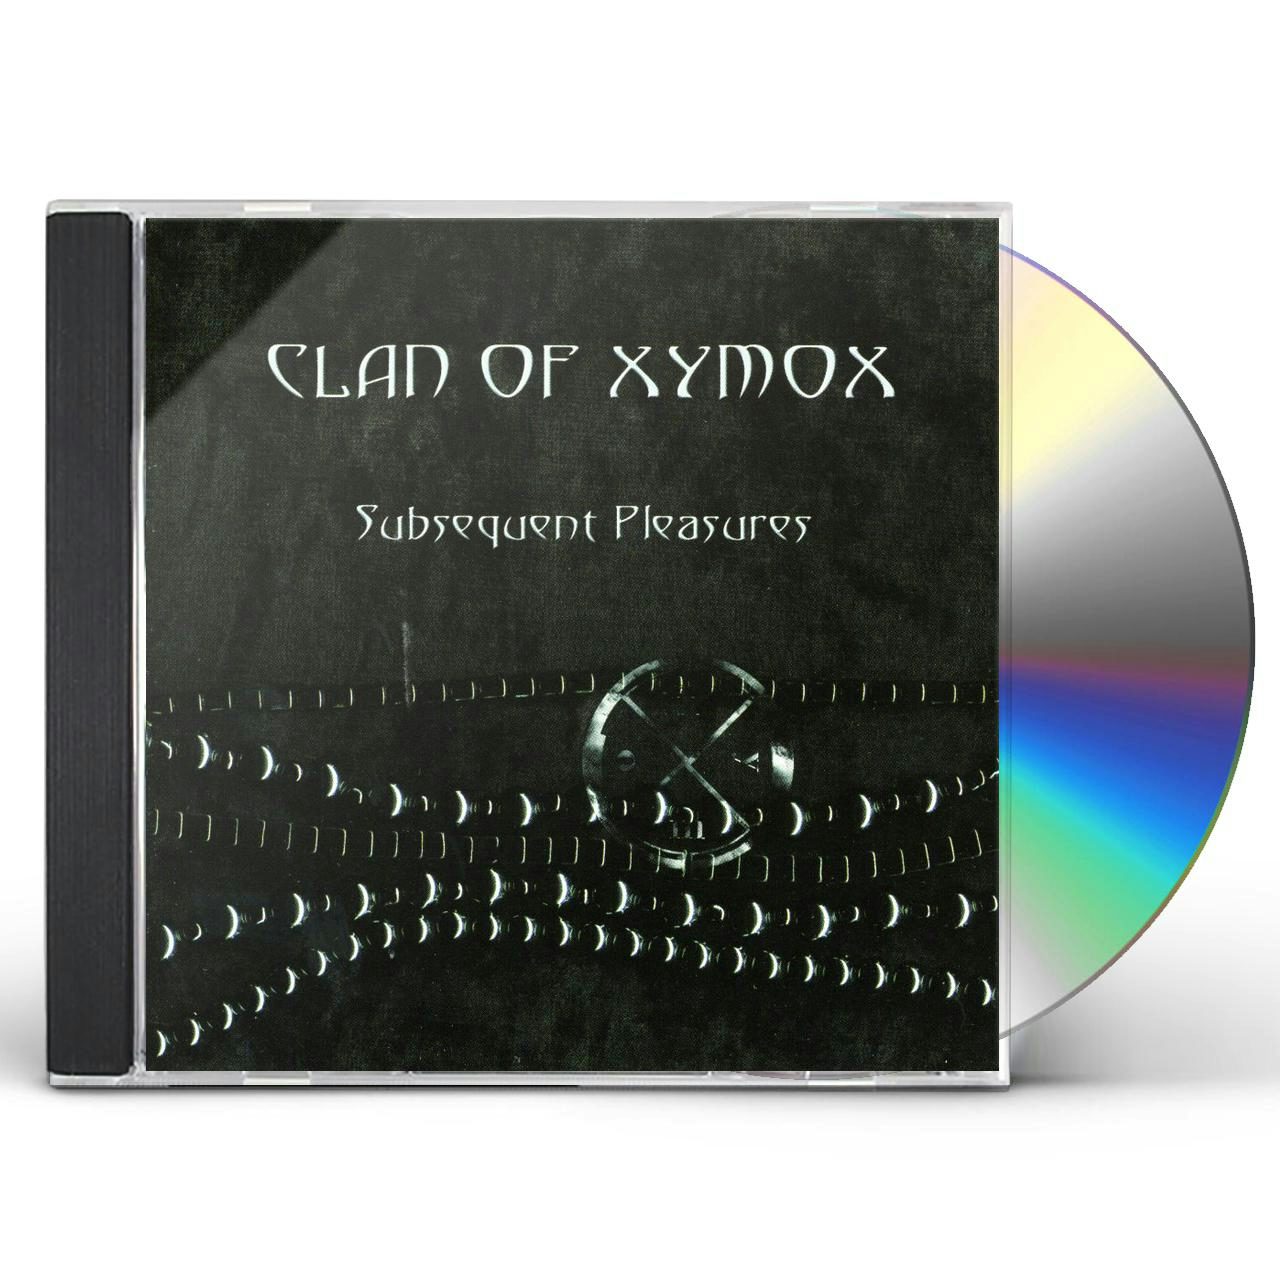 Clan of Xymox SUBSEQUENT PLEASURES CD